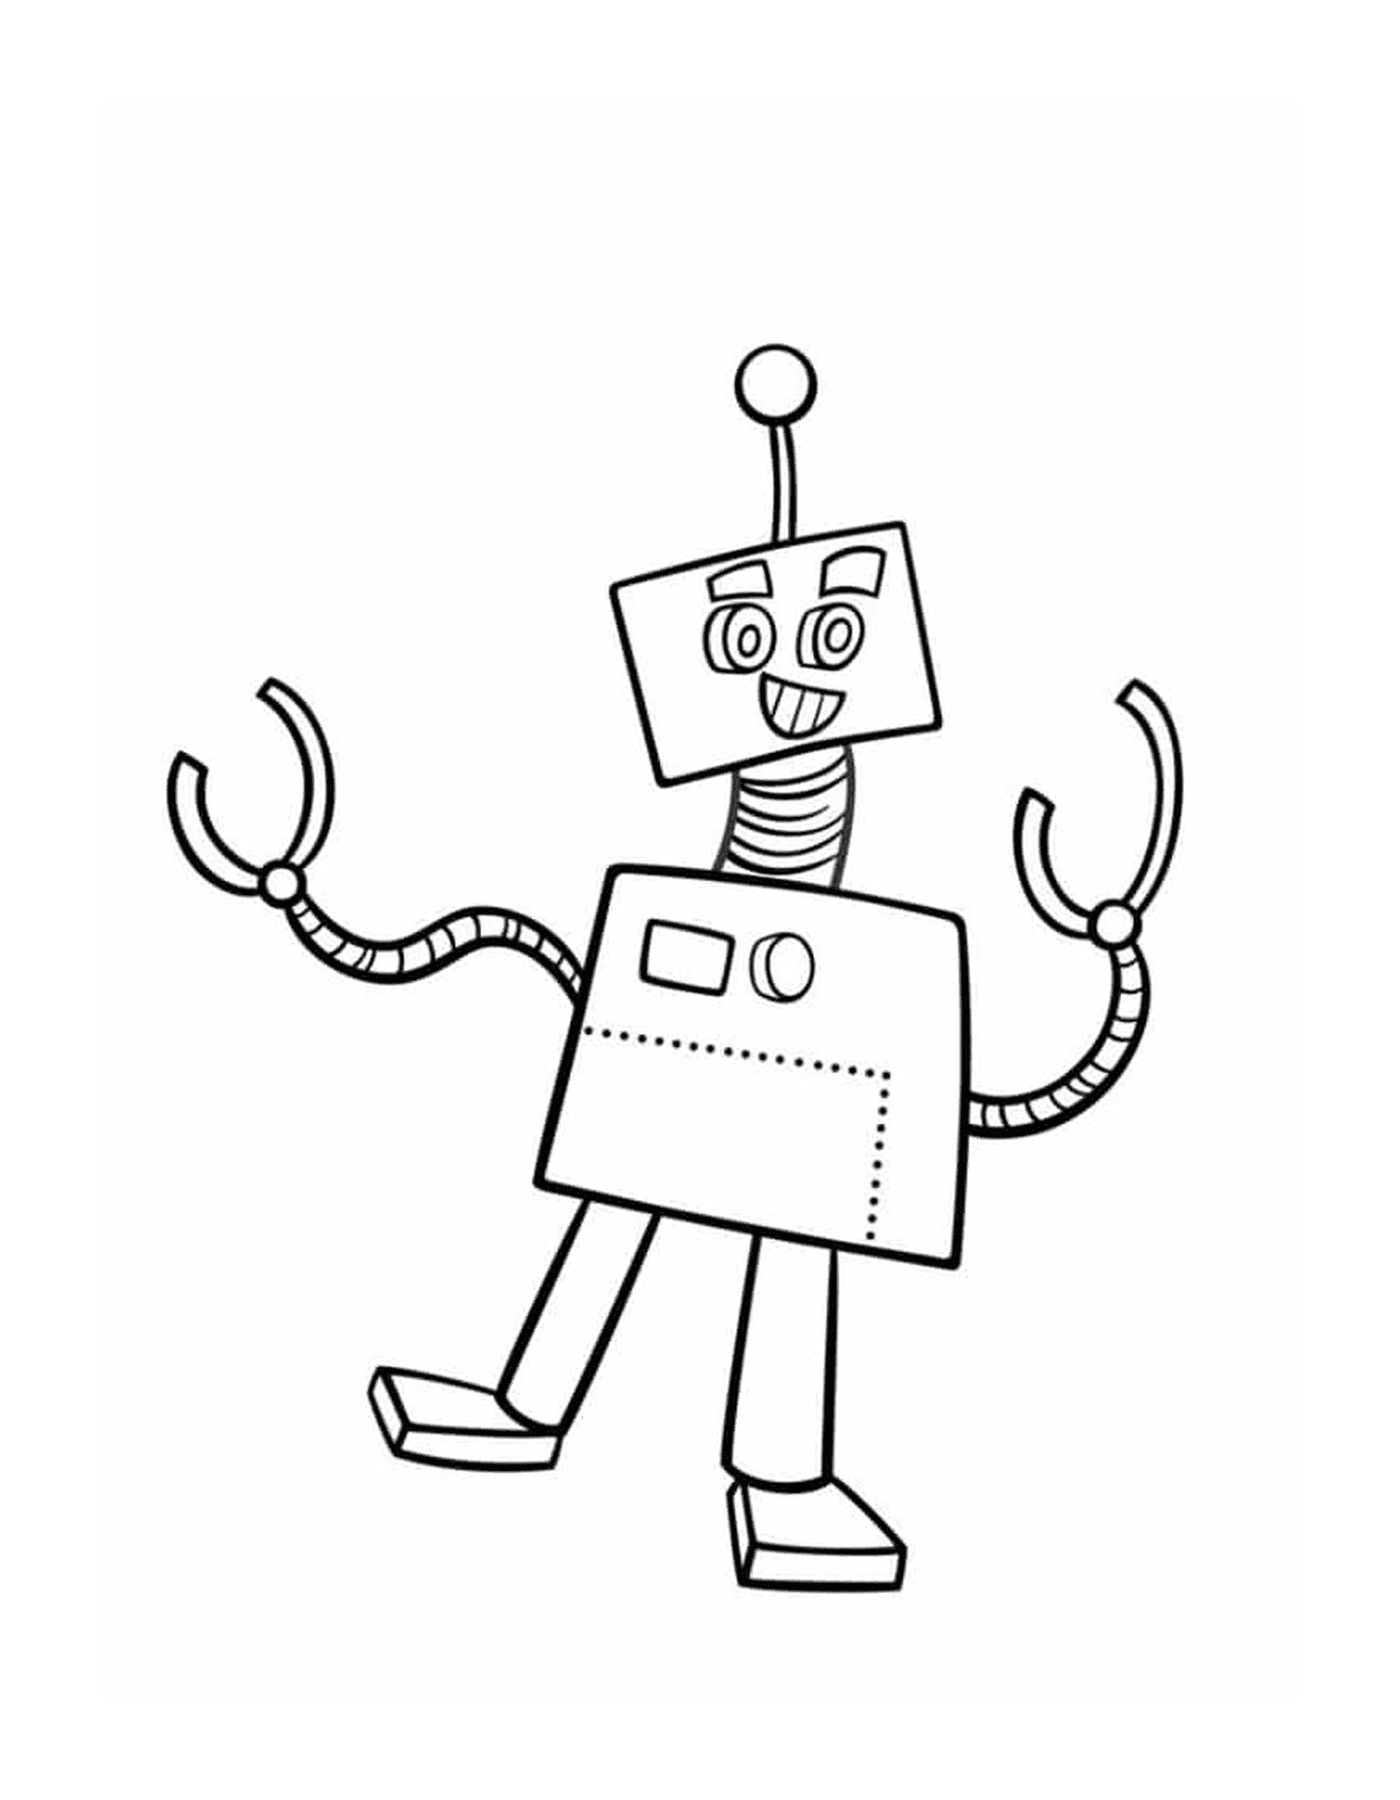  Robot a little disoriented 